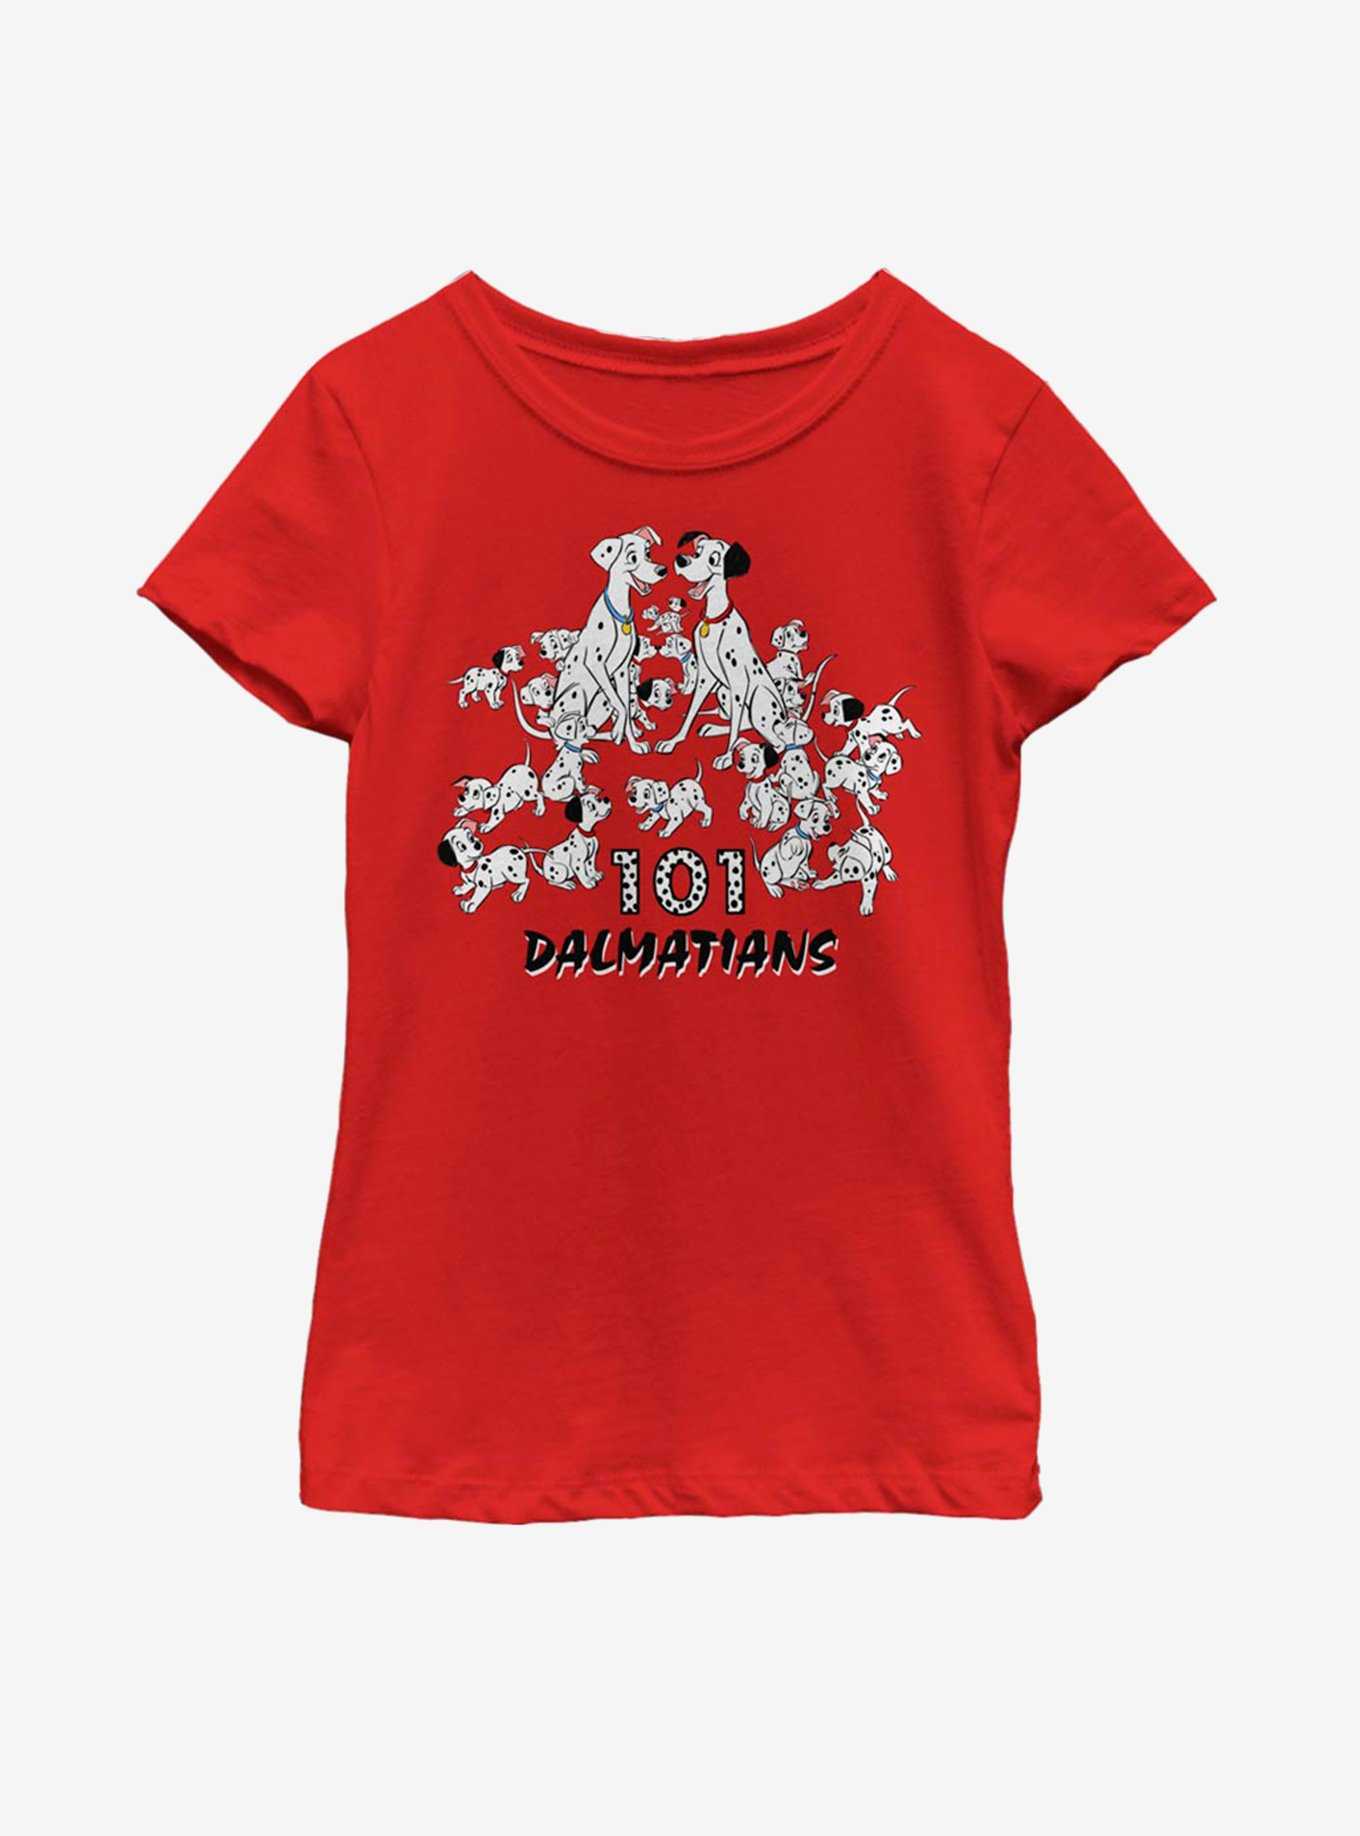 Disney 101 Dalmatians Family Youth Girls T-Shirt, , hi-res